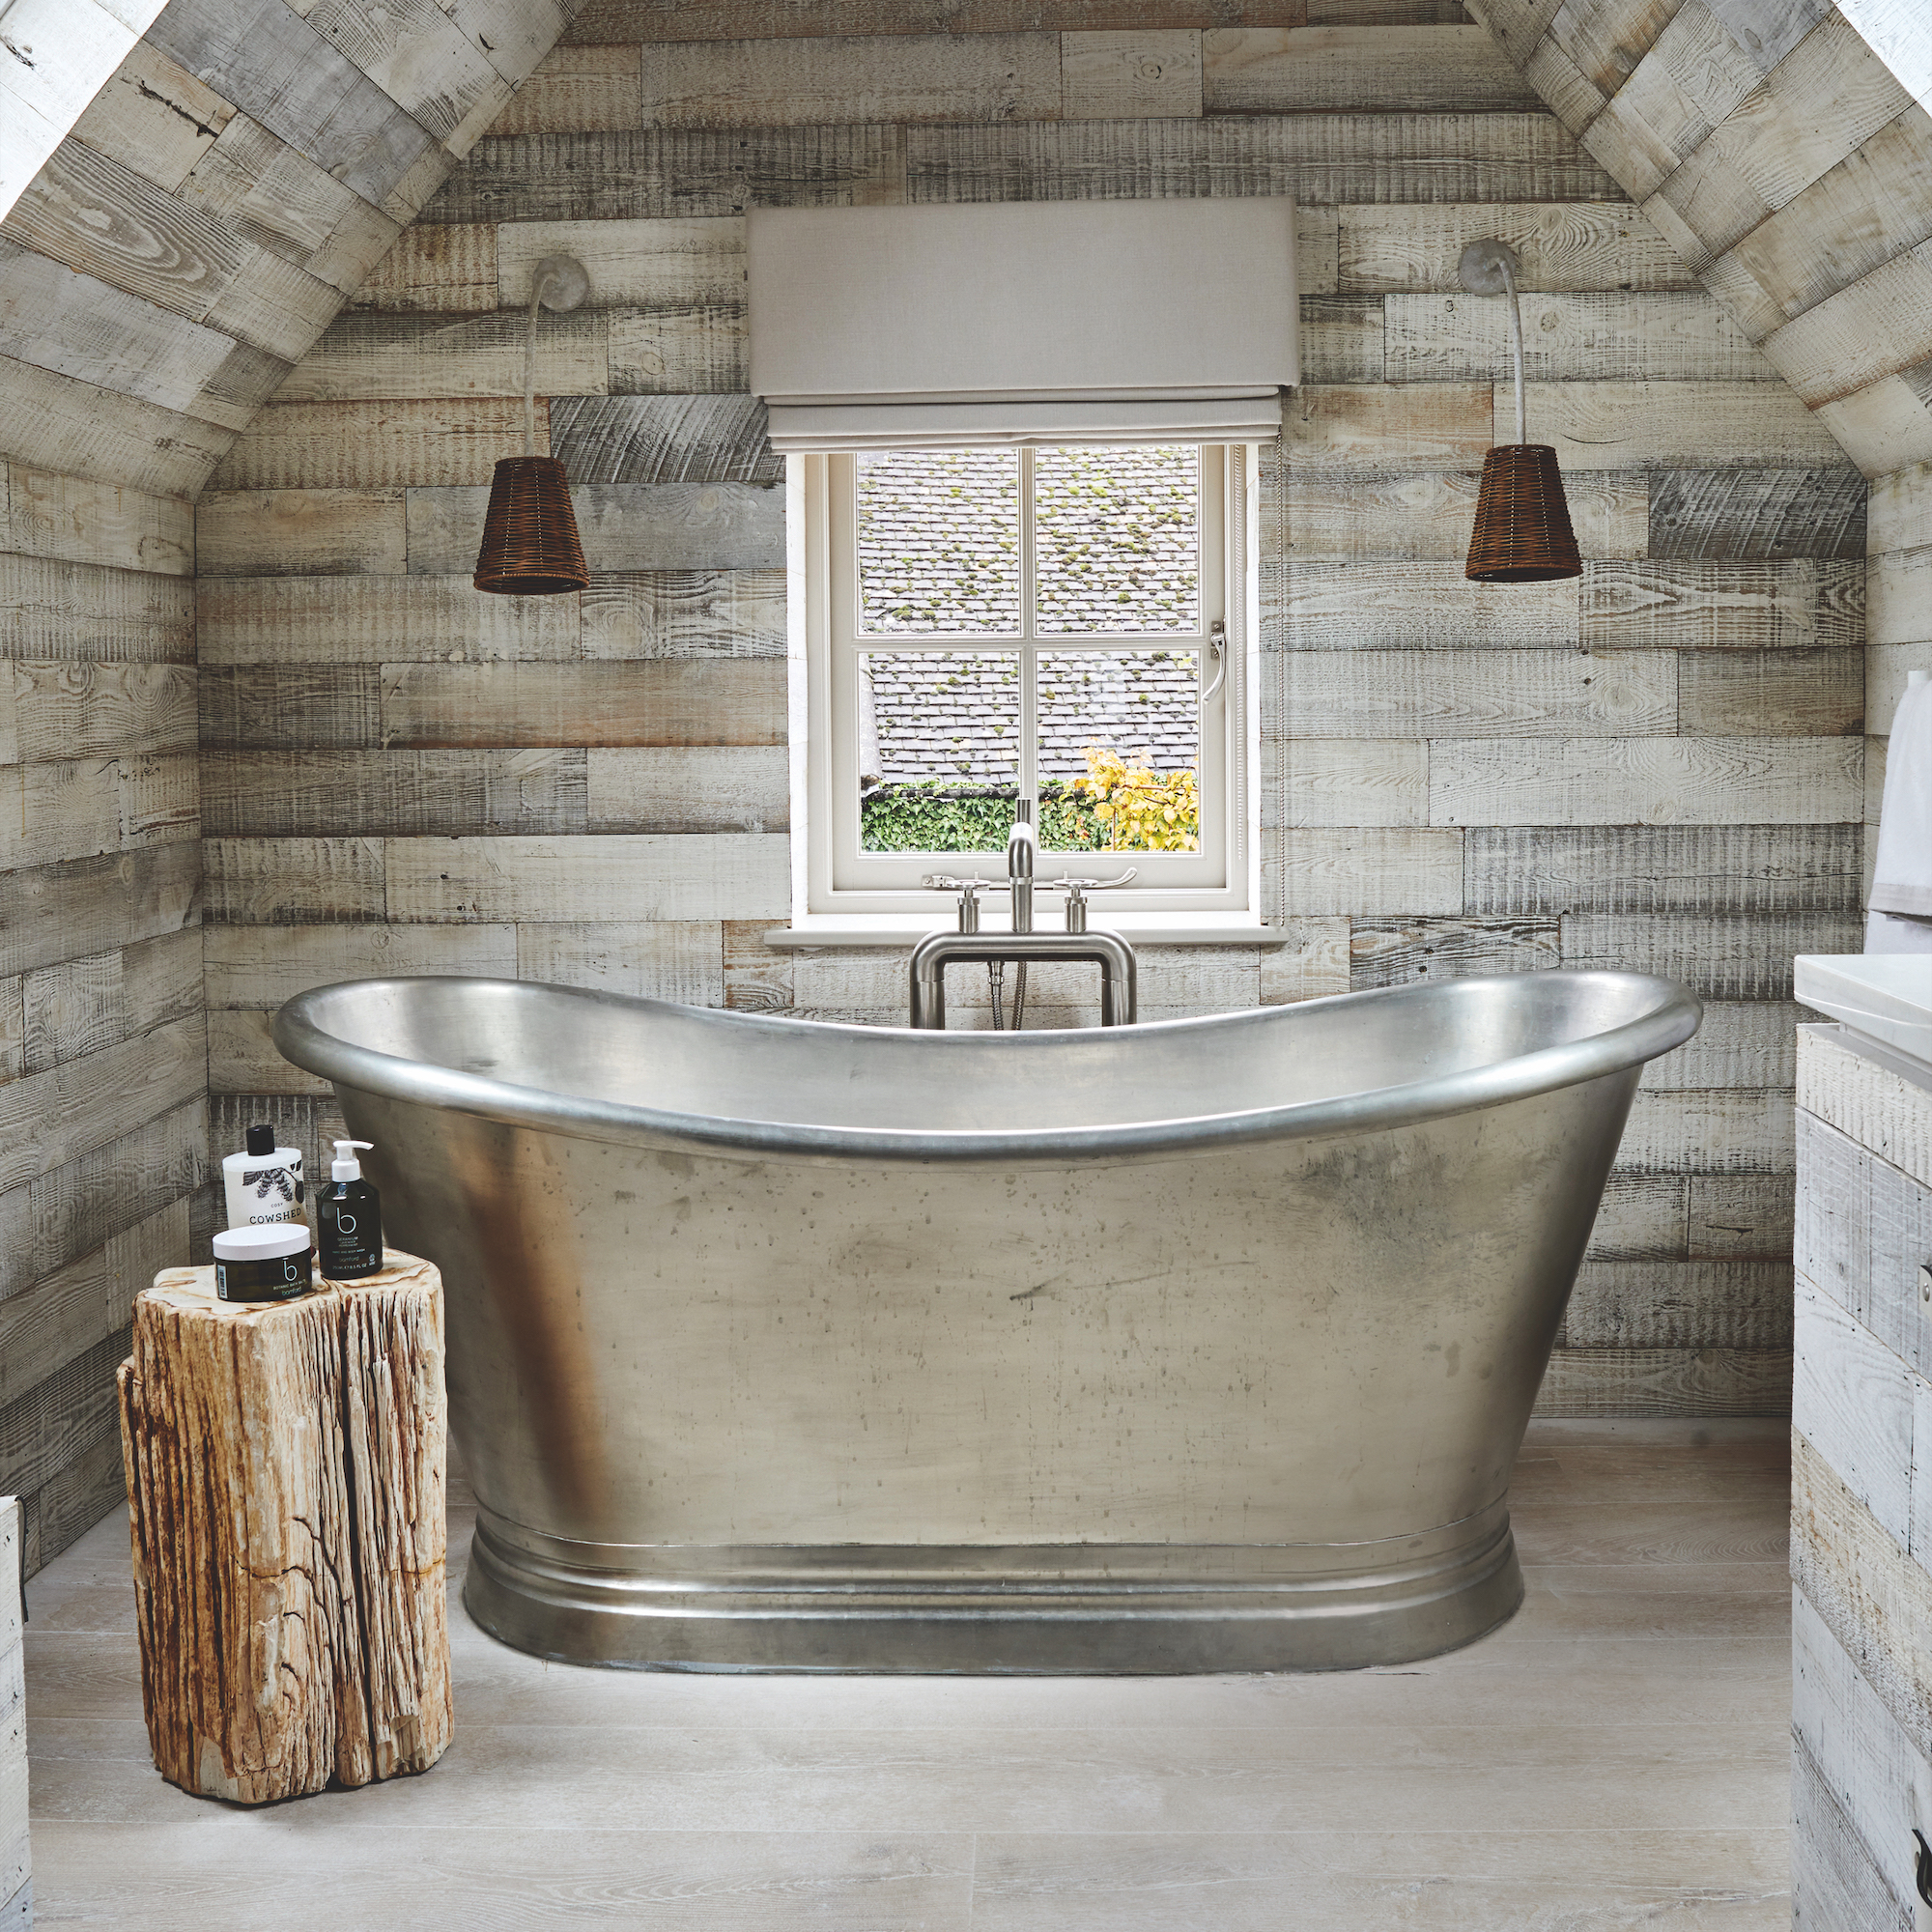 steel bath in rustic bathroom with wooden walls